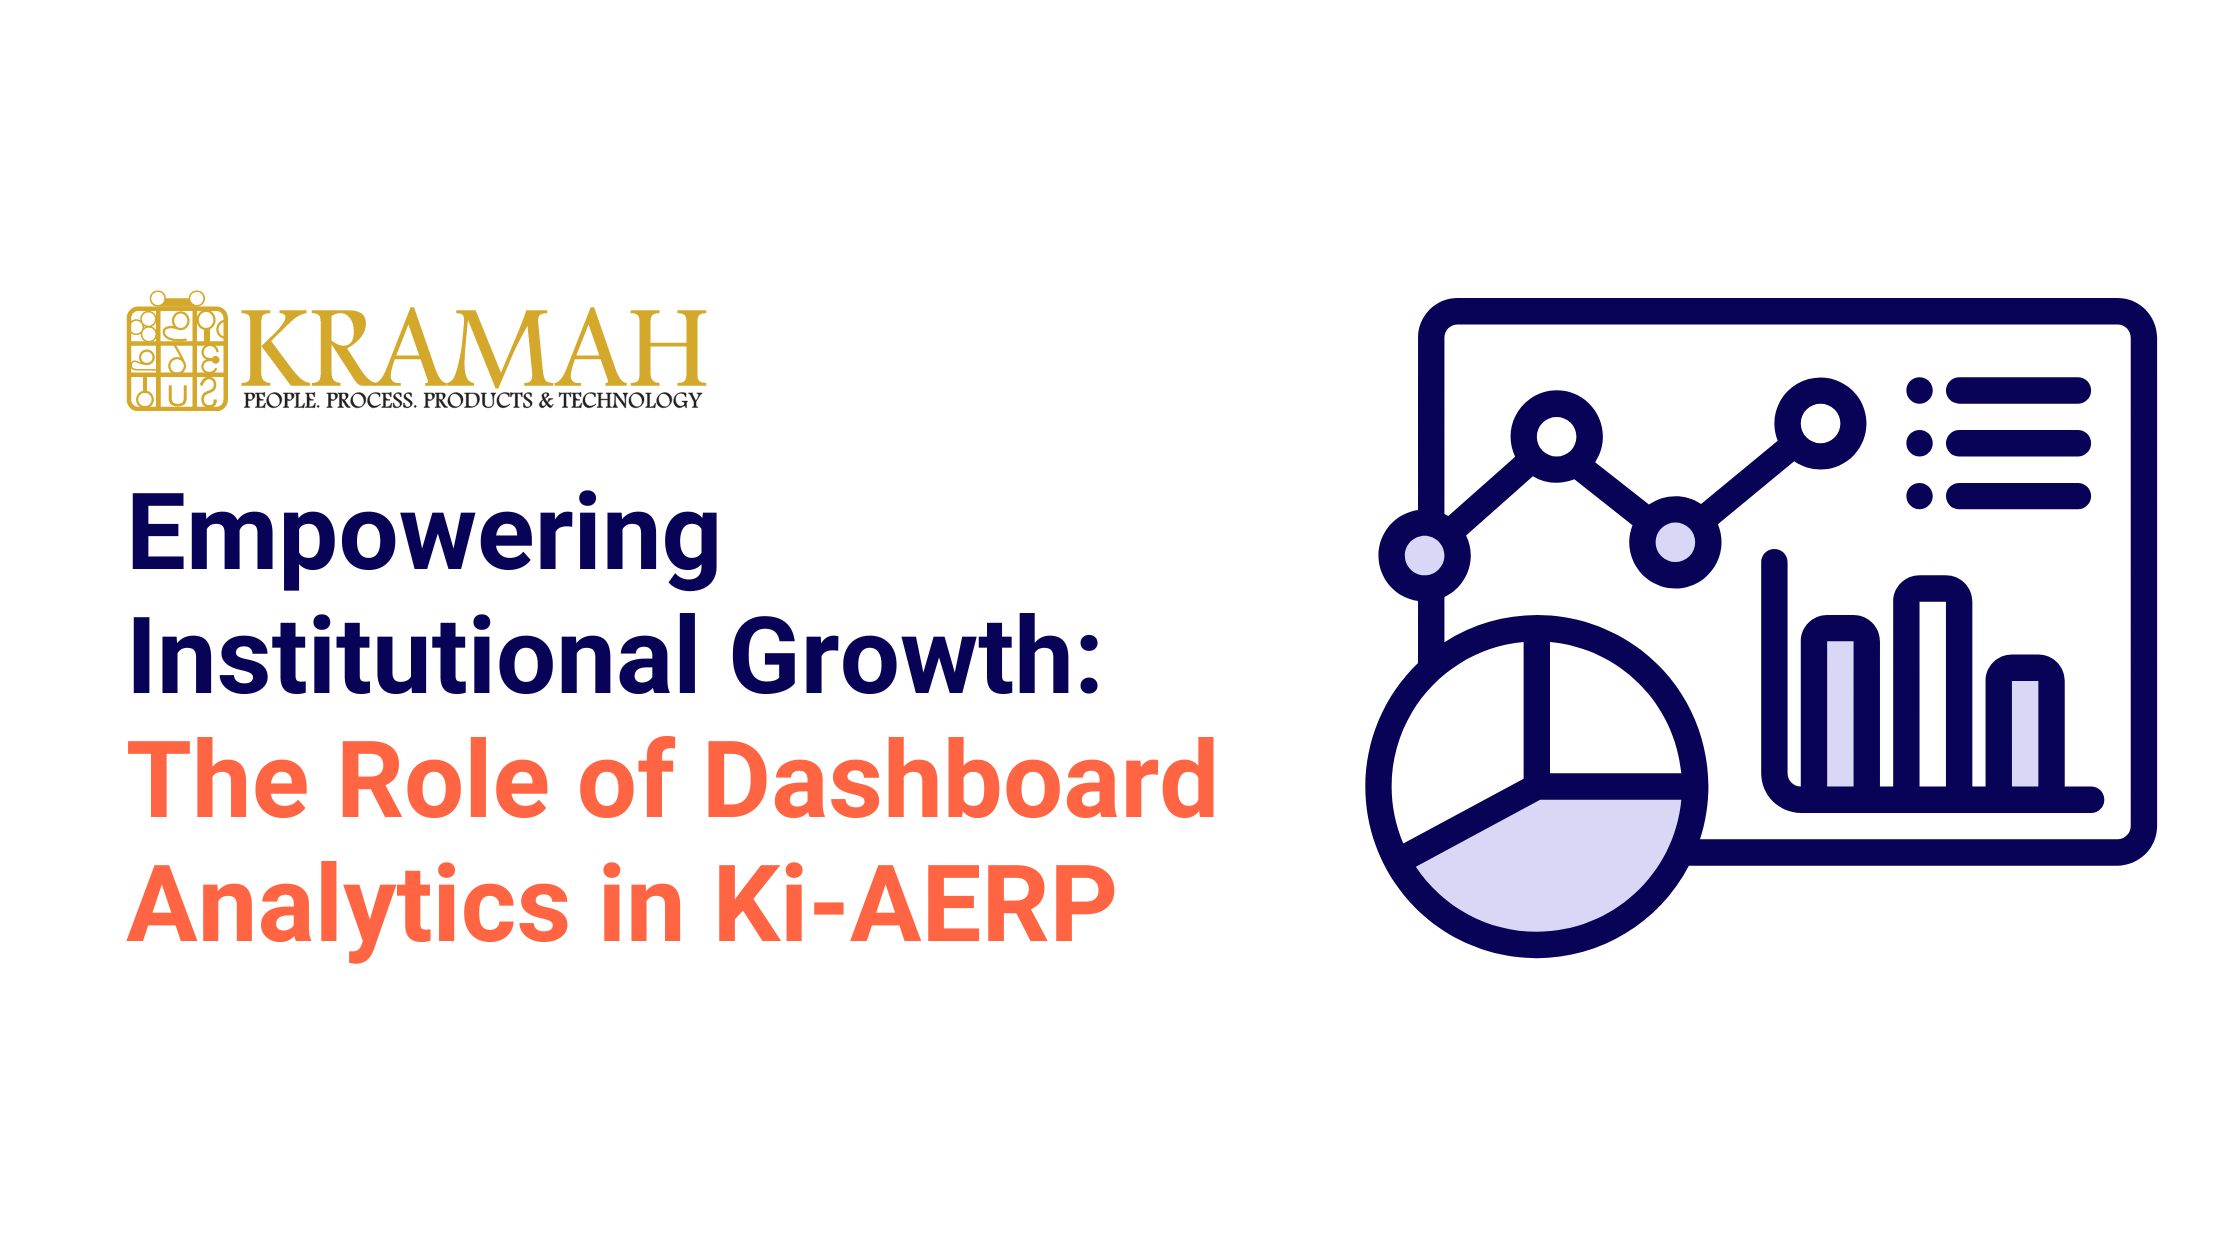 The Role of Dashboard Analytics in Ki-AERP